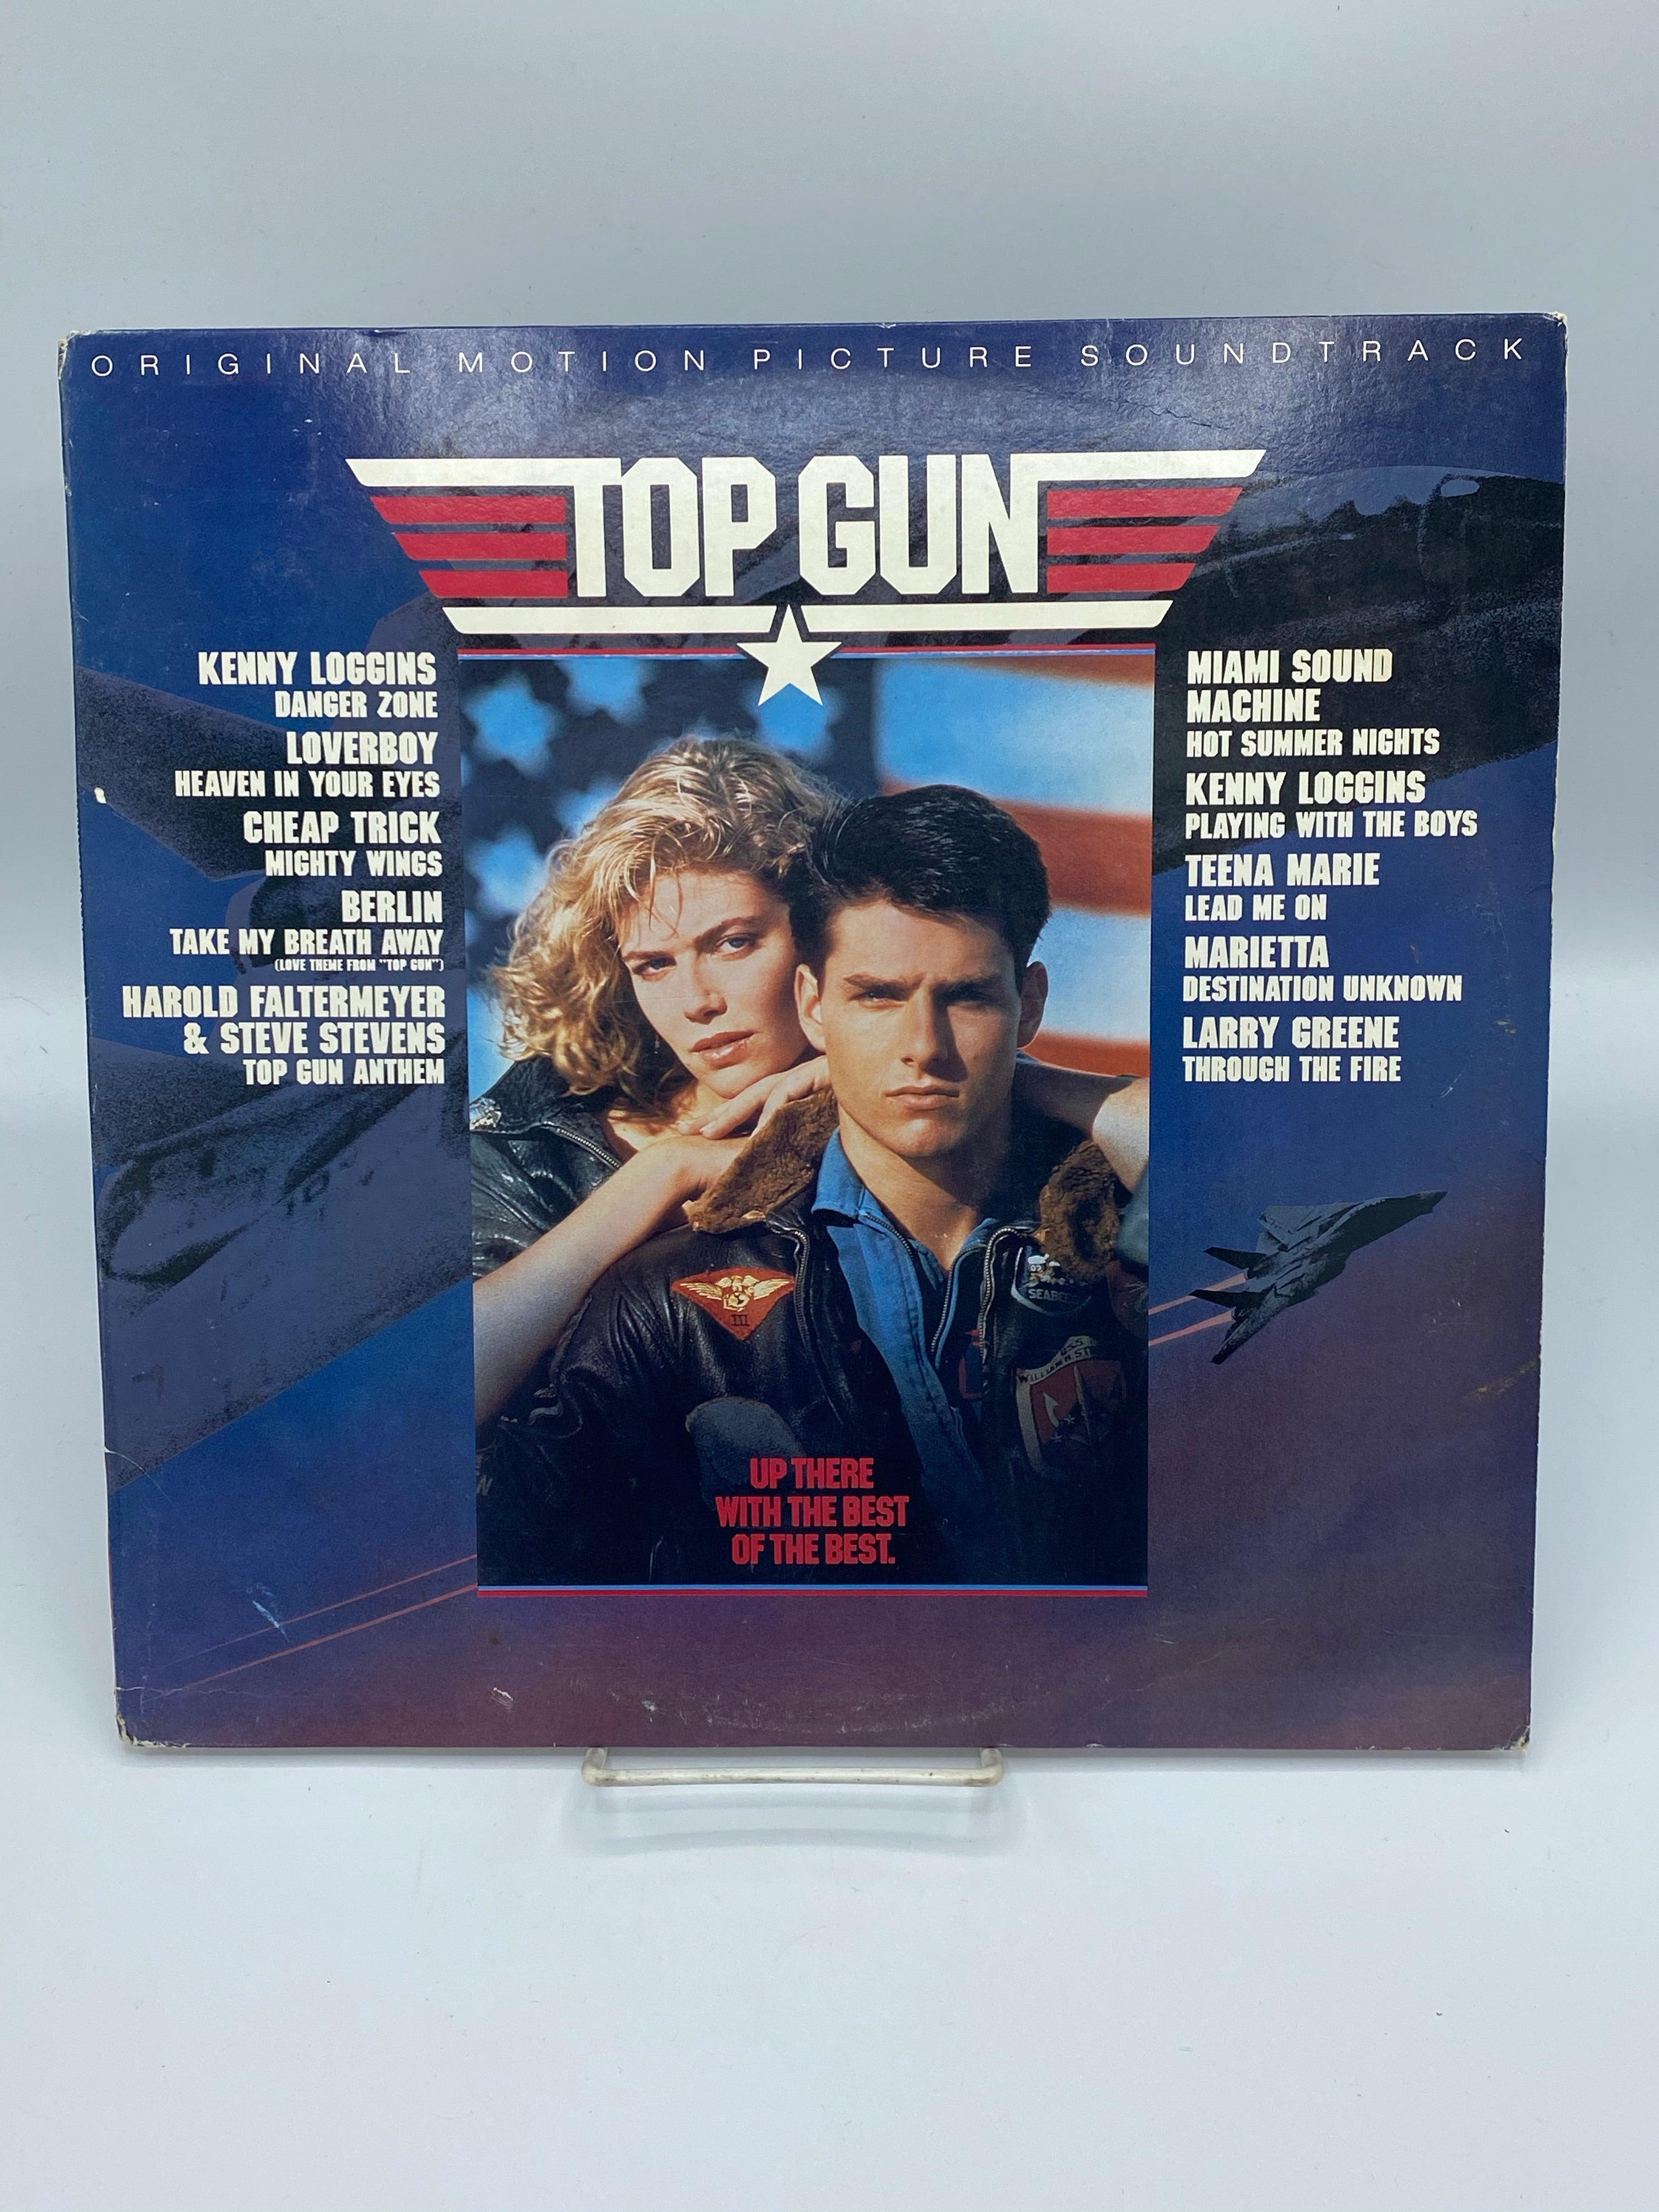 Top Gun Soundtrack